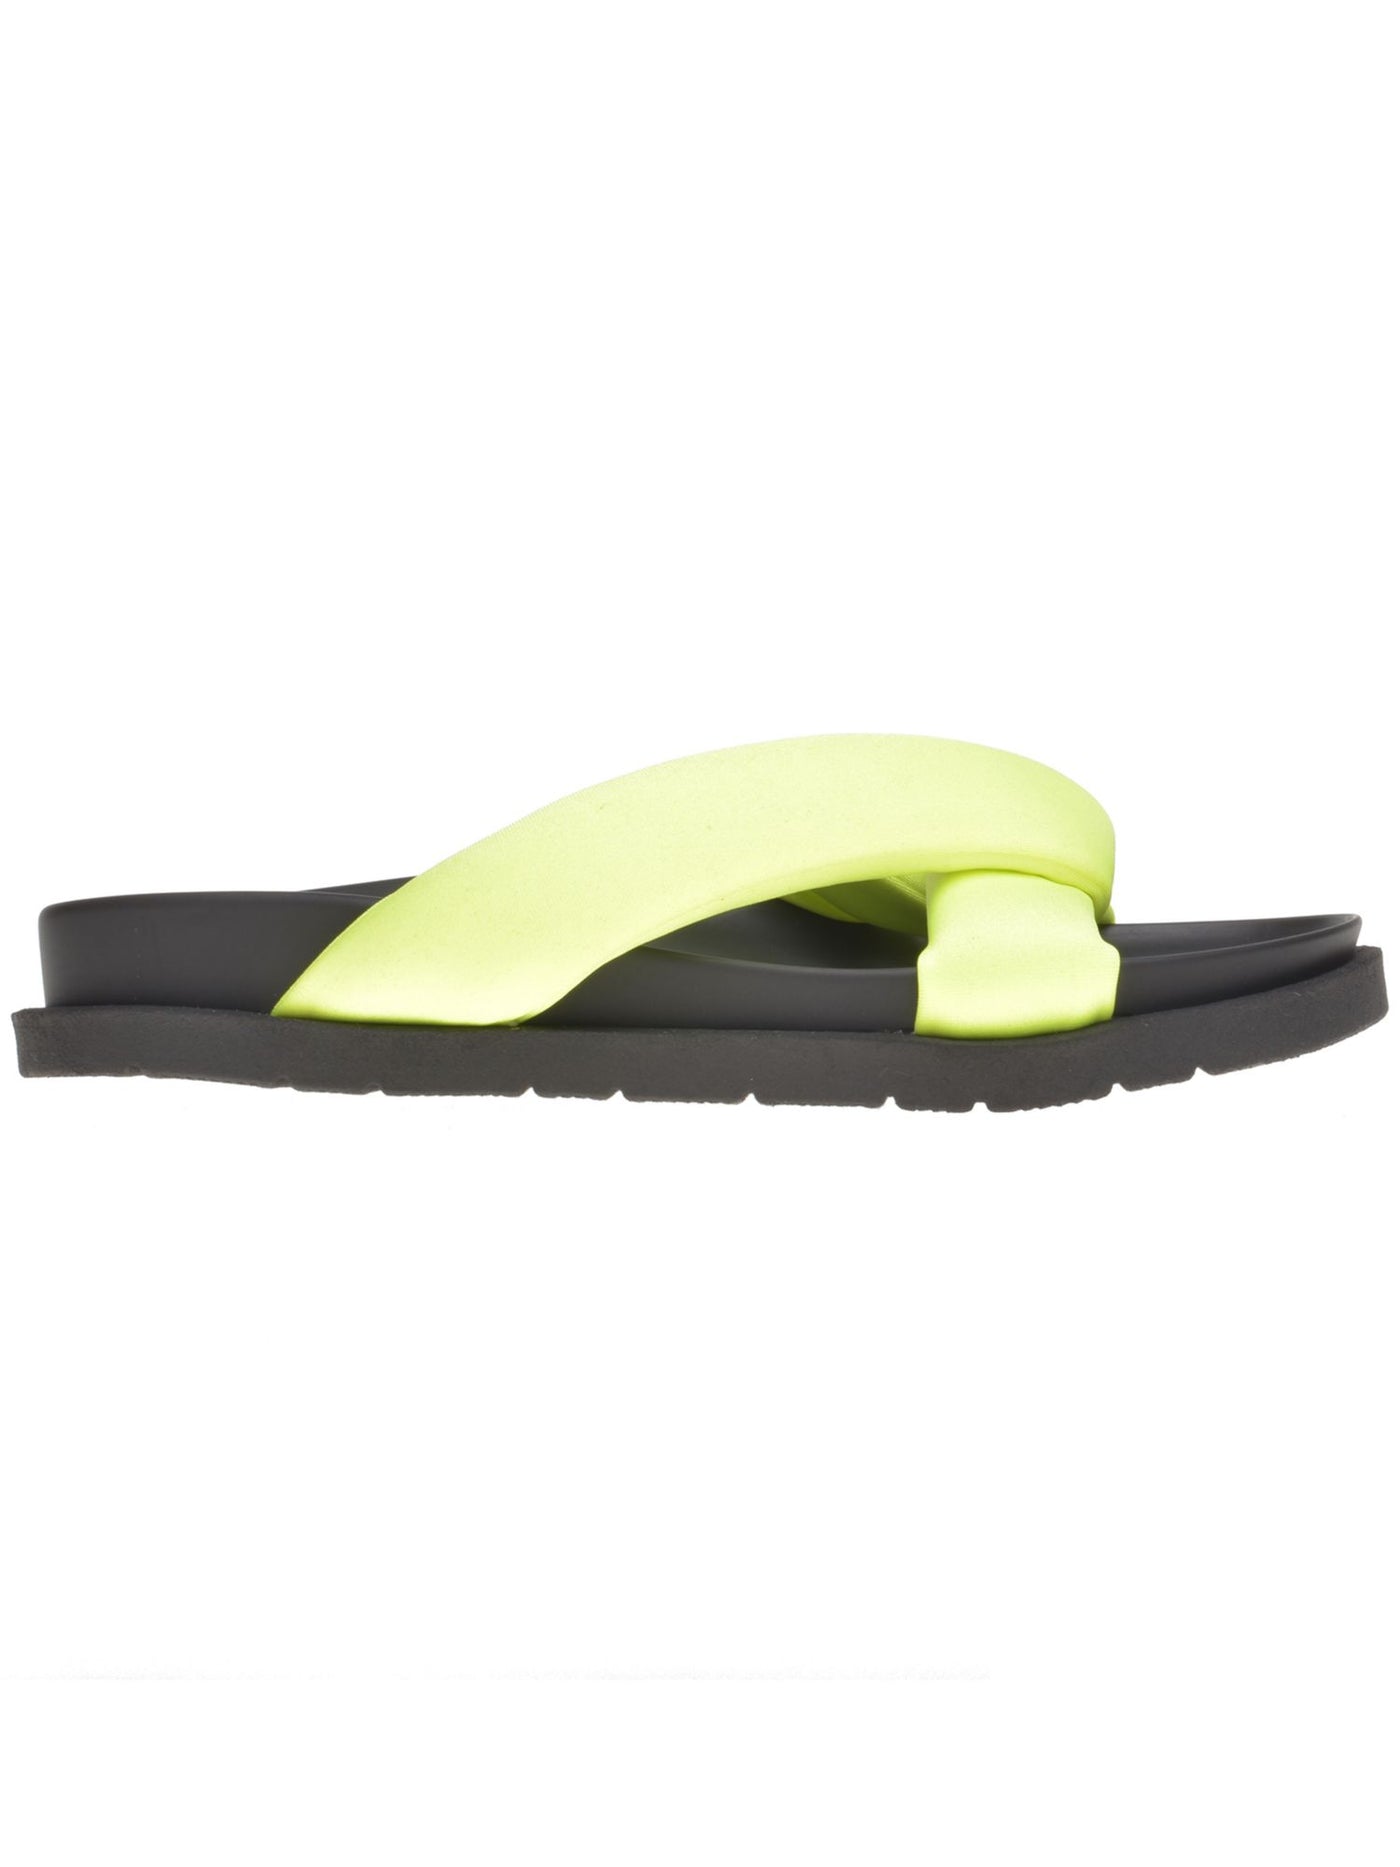 WILD PAIR Womens Green Puffer Sandals. Beck Slip On Slide Sandals Shoes M